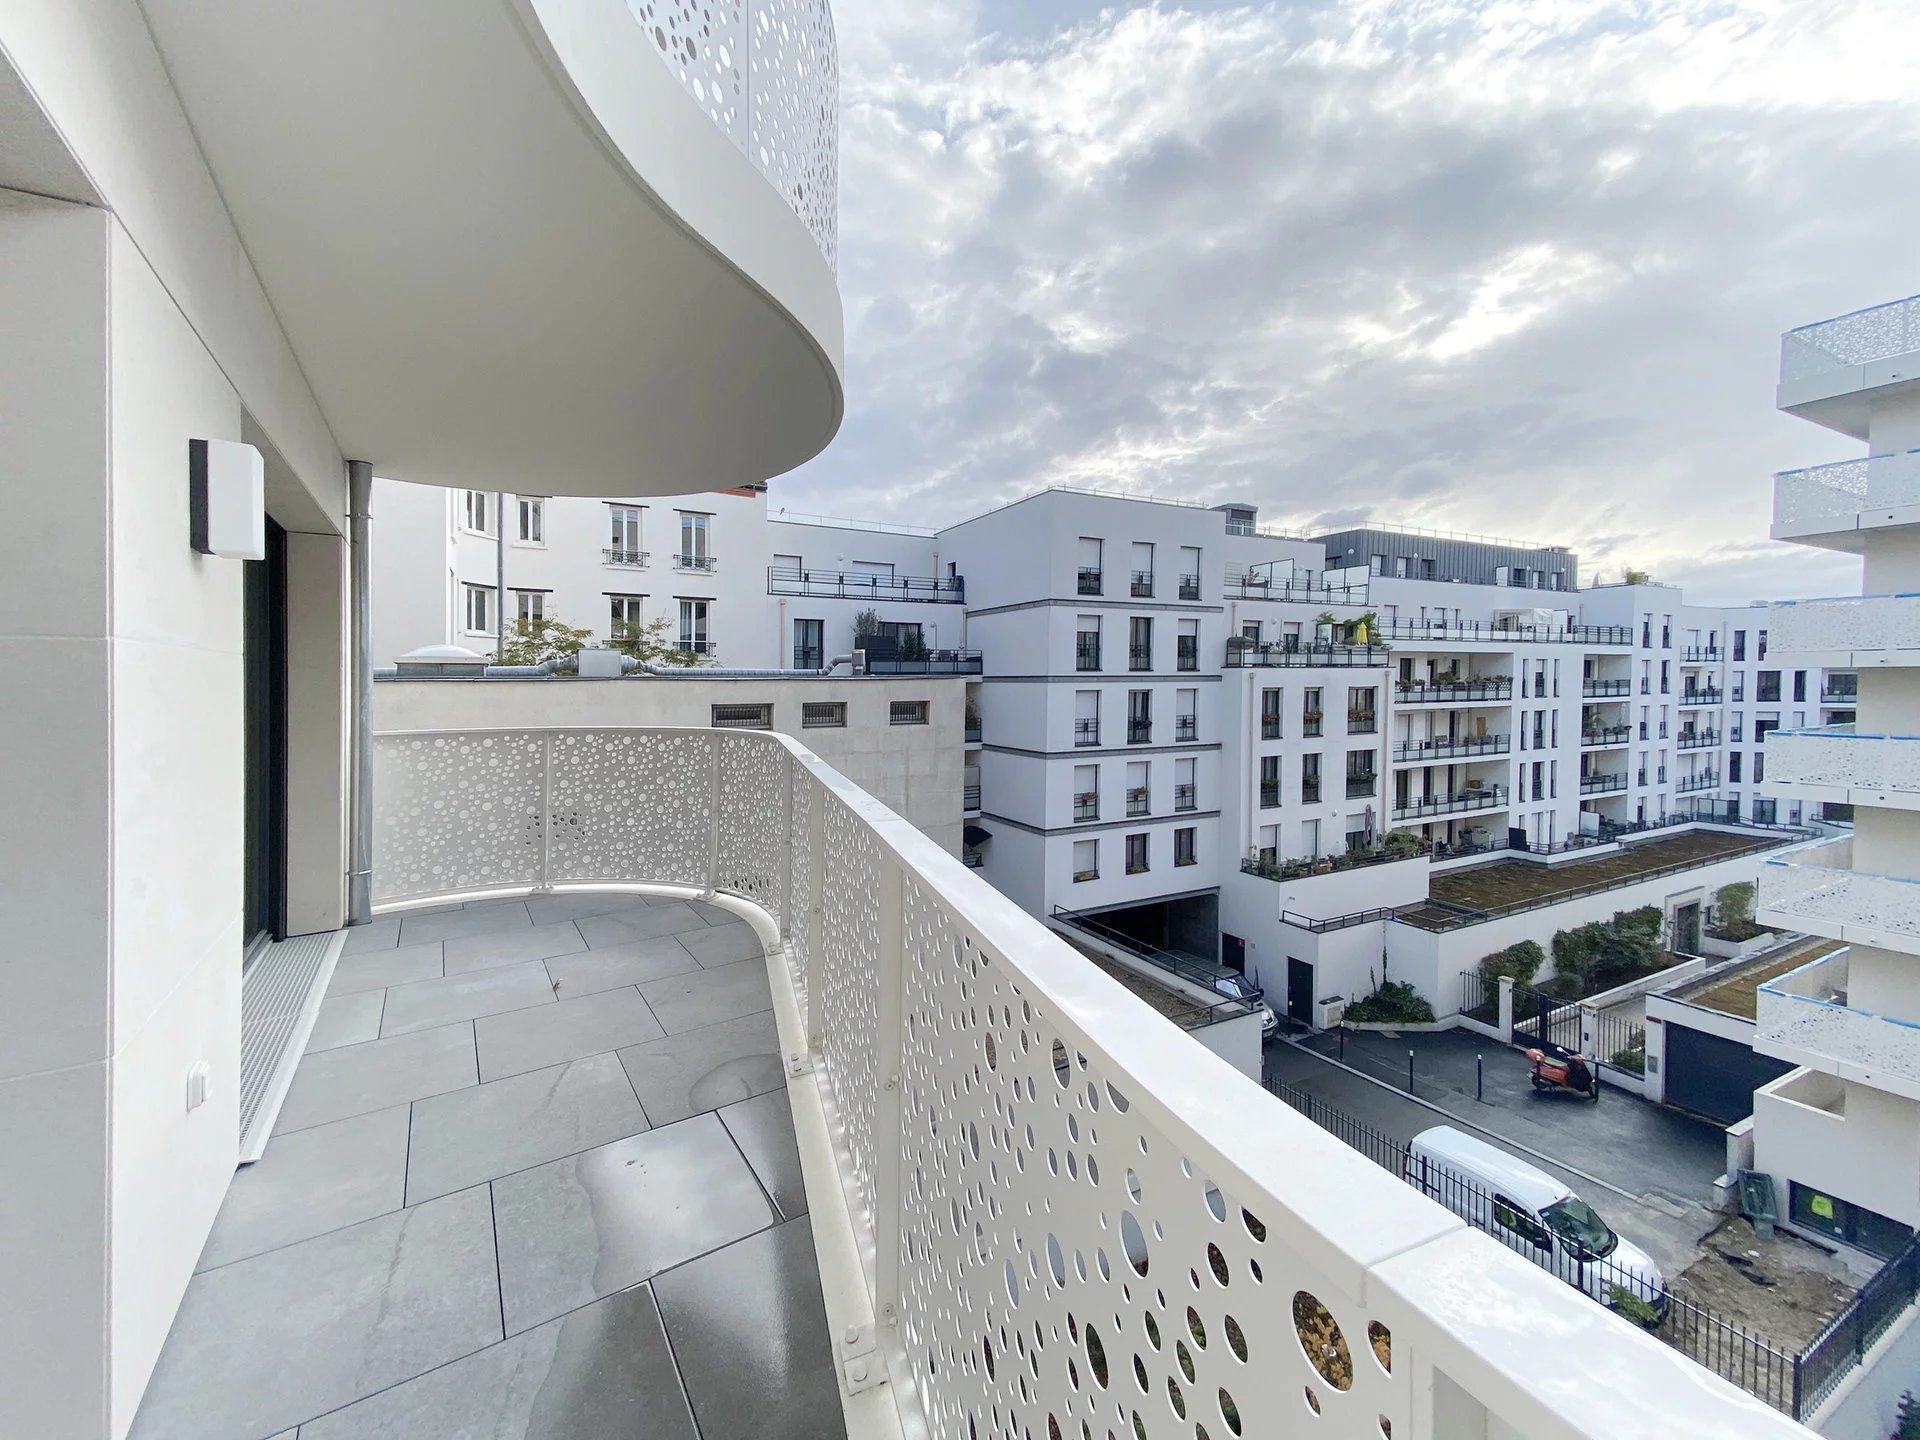 Appartement a louer neuilly-sur-seine - 2 pièce(s) - 41.04 m2 - Surfyn